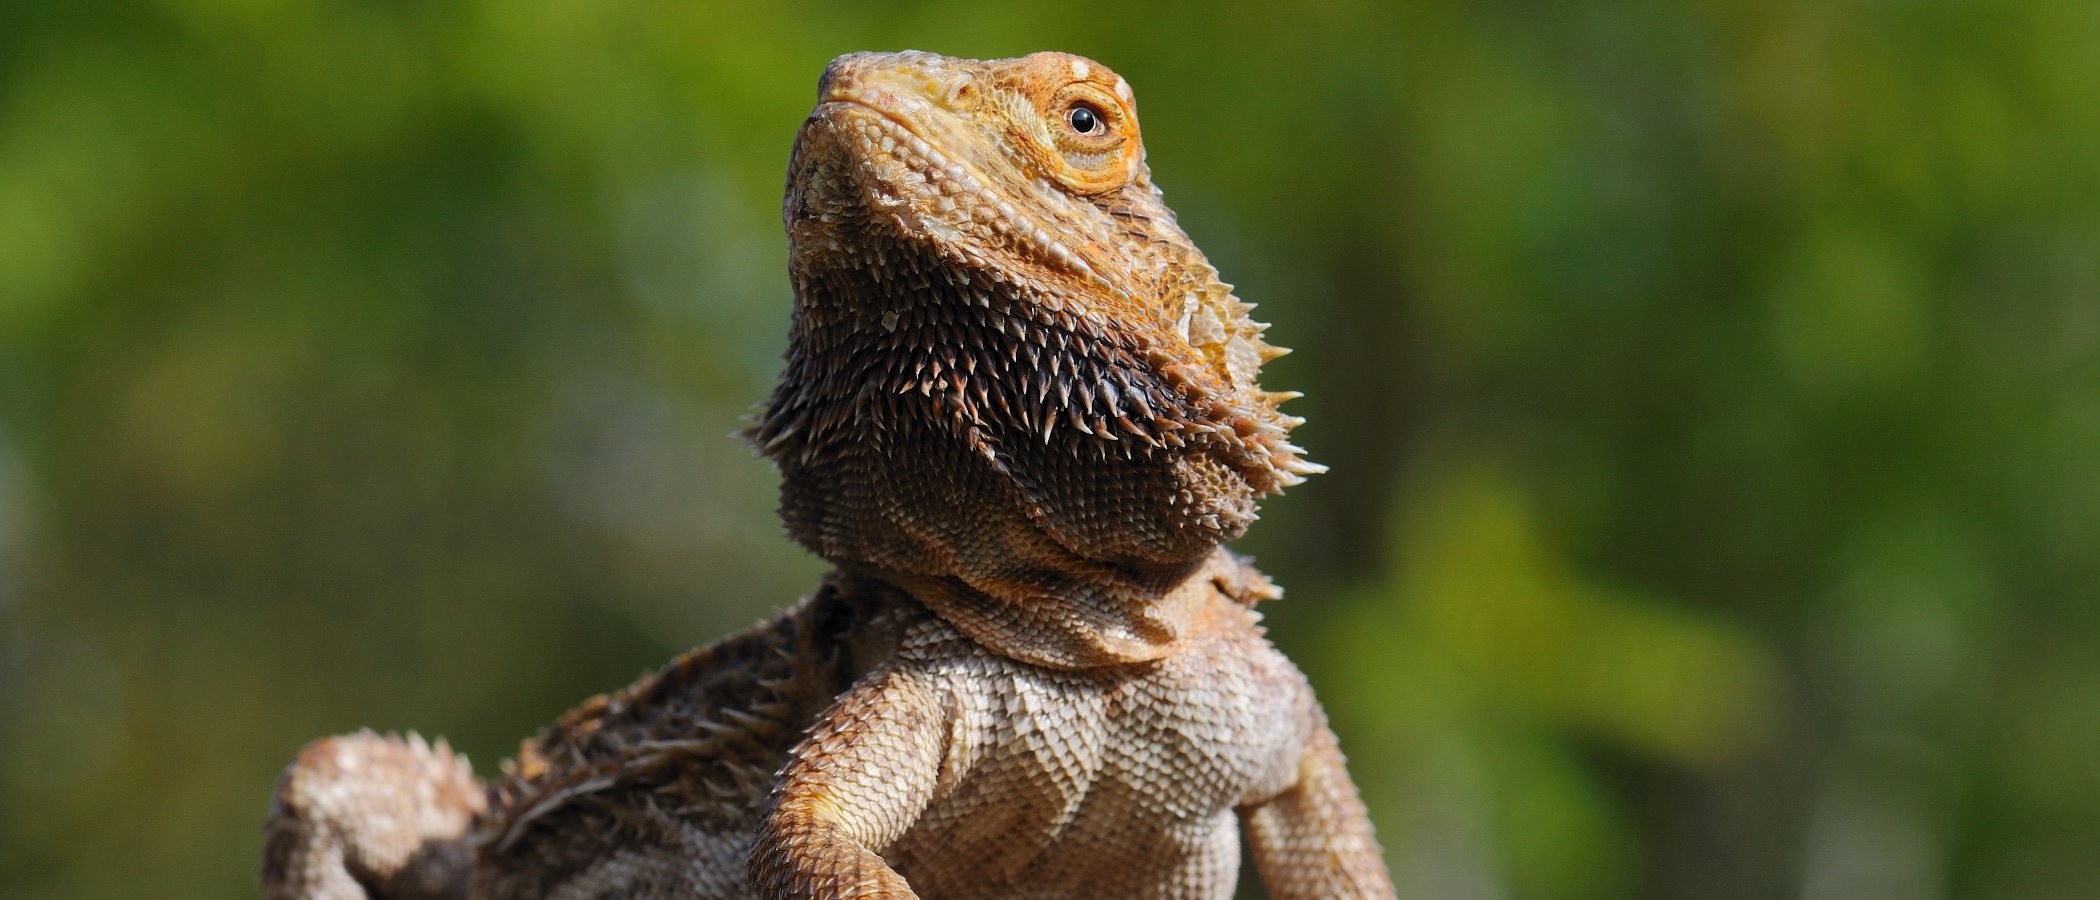 Pogona o dragón barbudo: conoce todo sobre este reptil